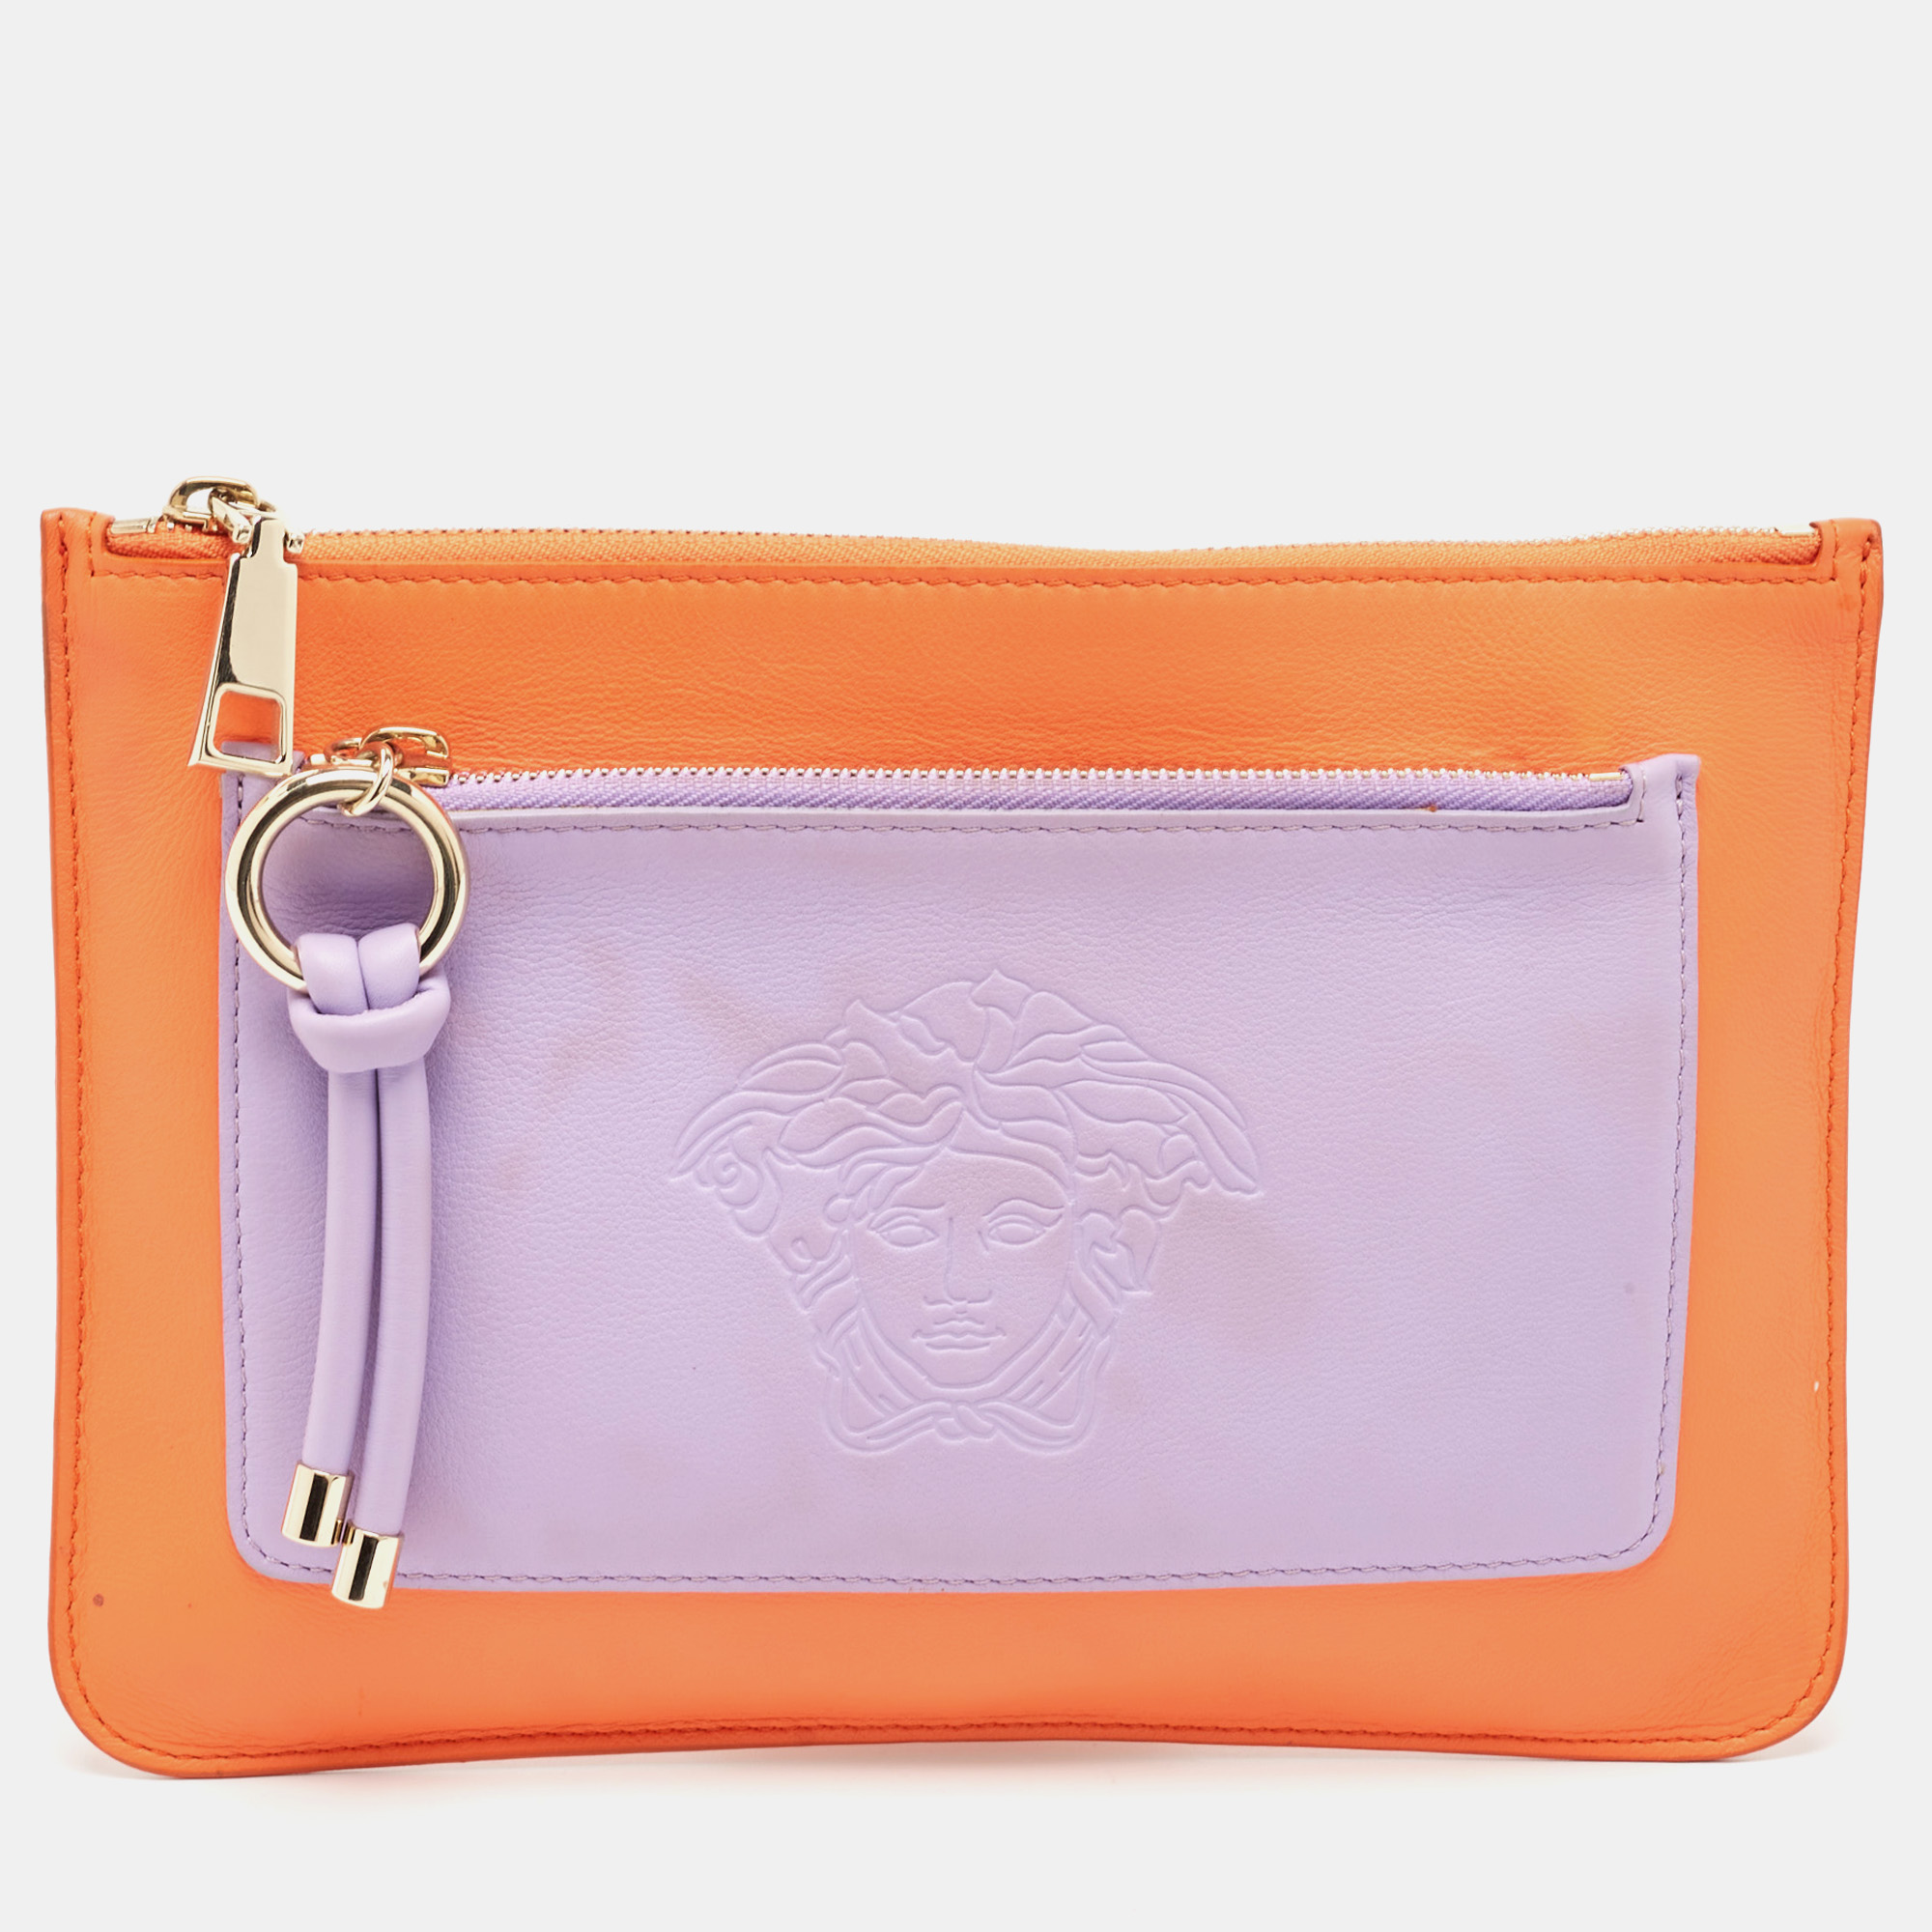 Pre-owned Versace Orange/purple Leather Medusa Embossed Slim Clutch